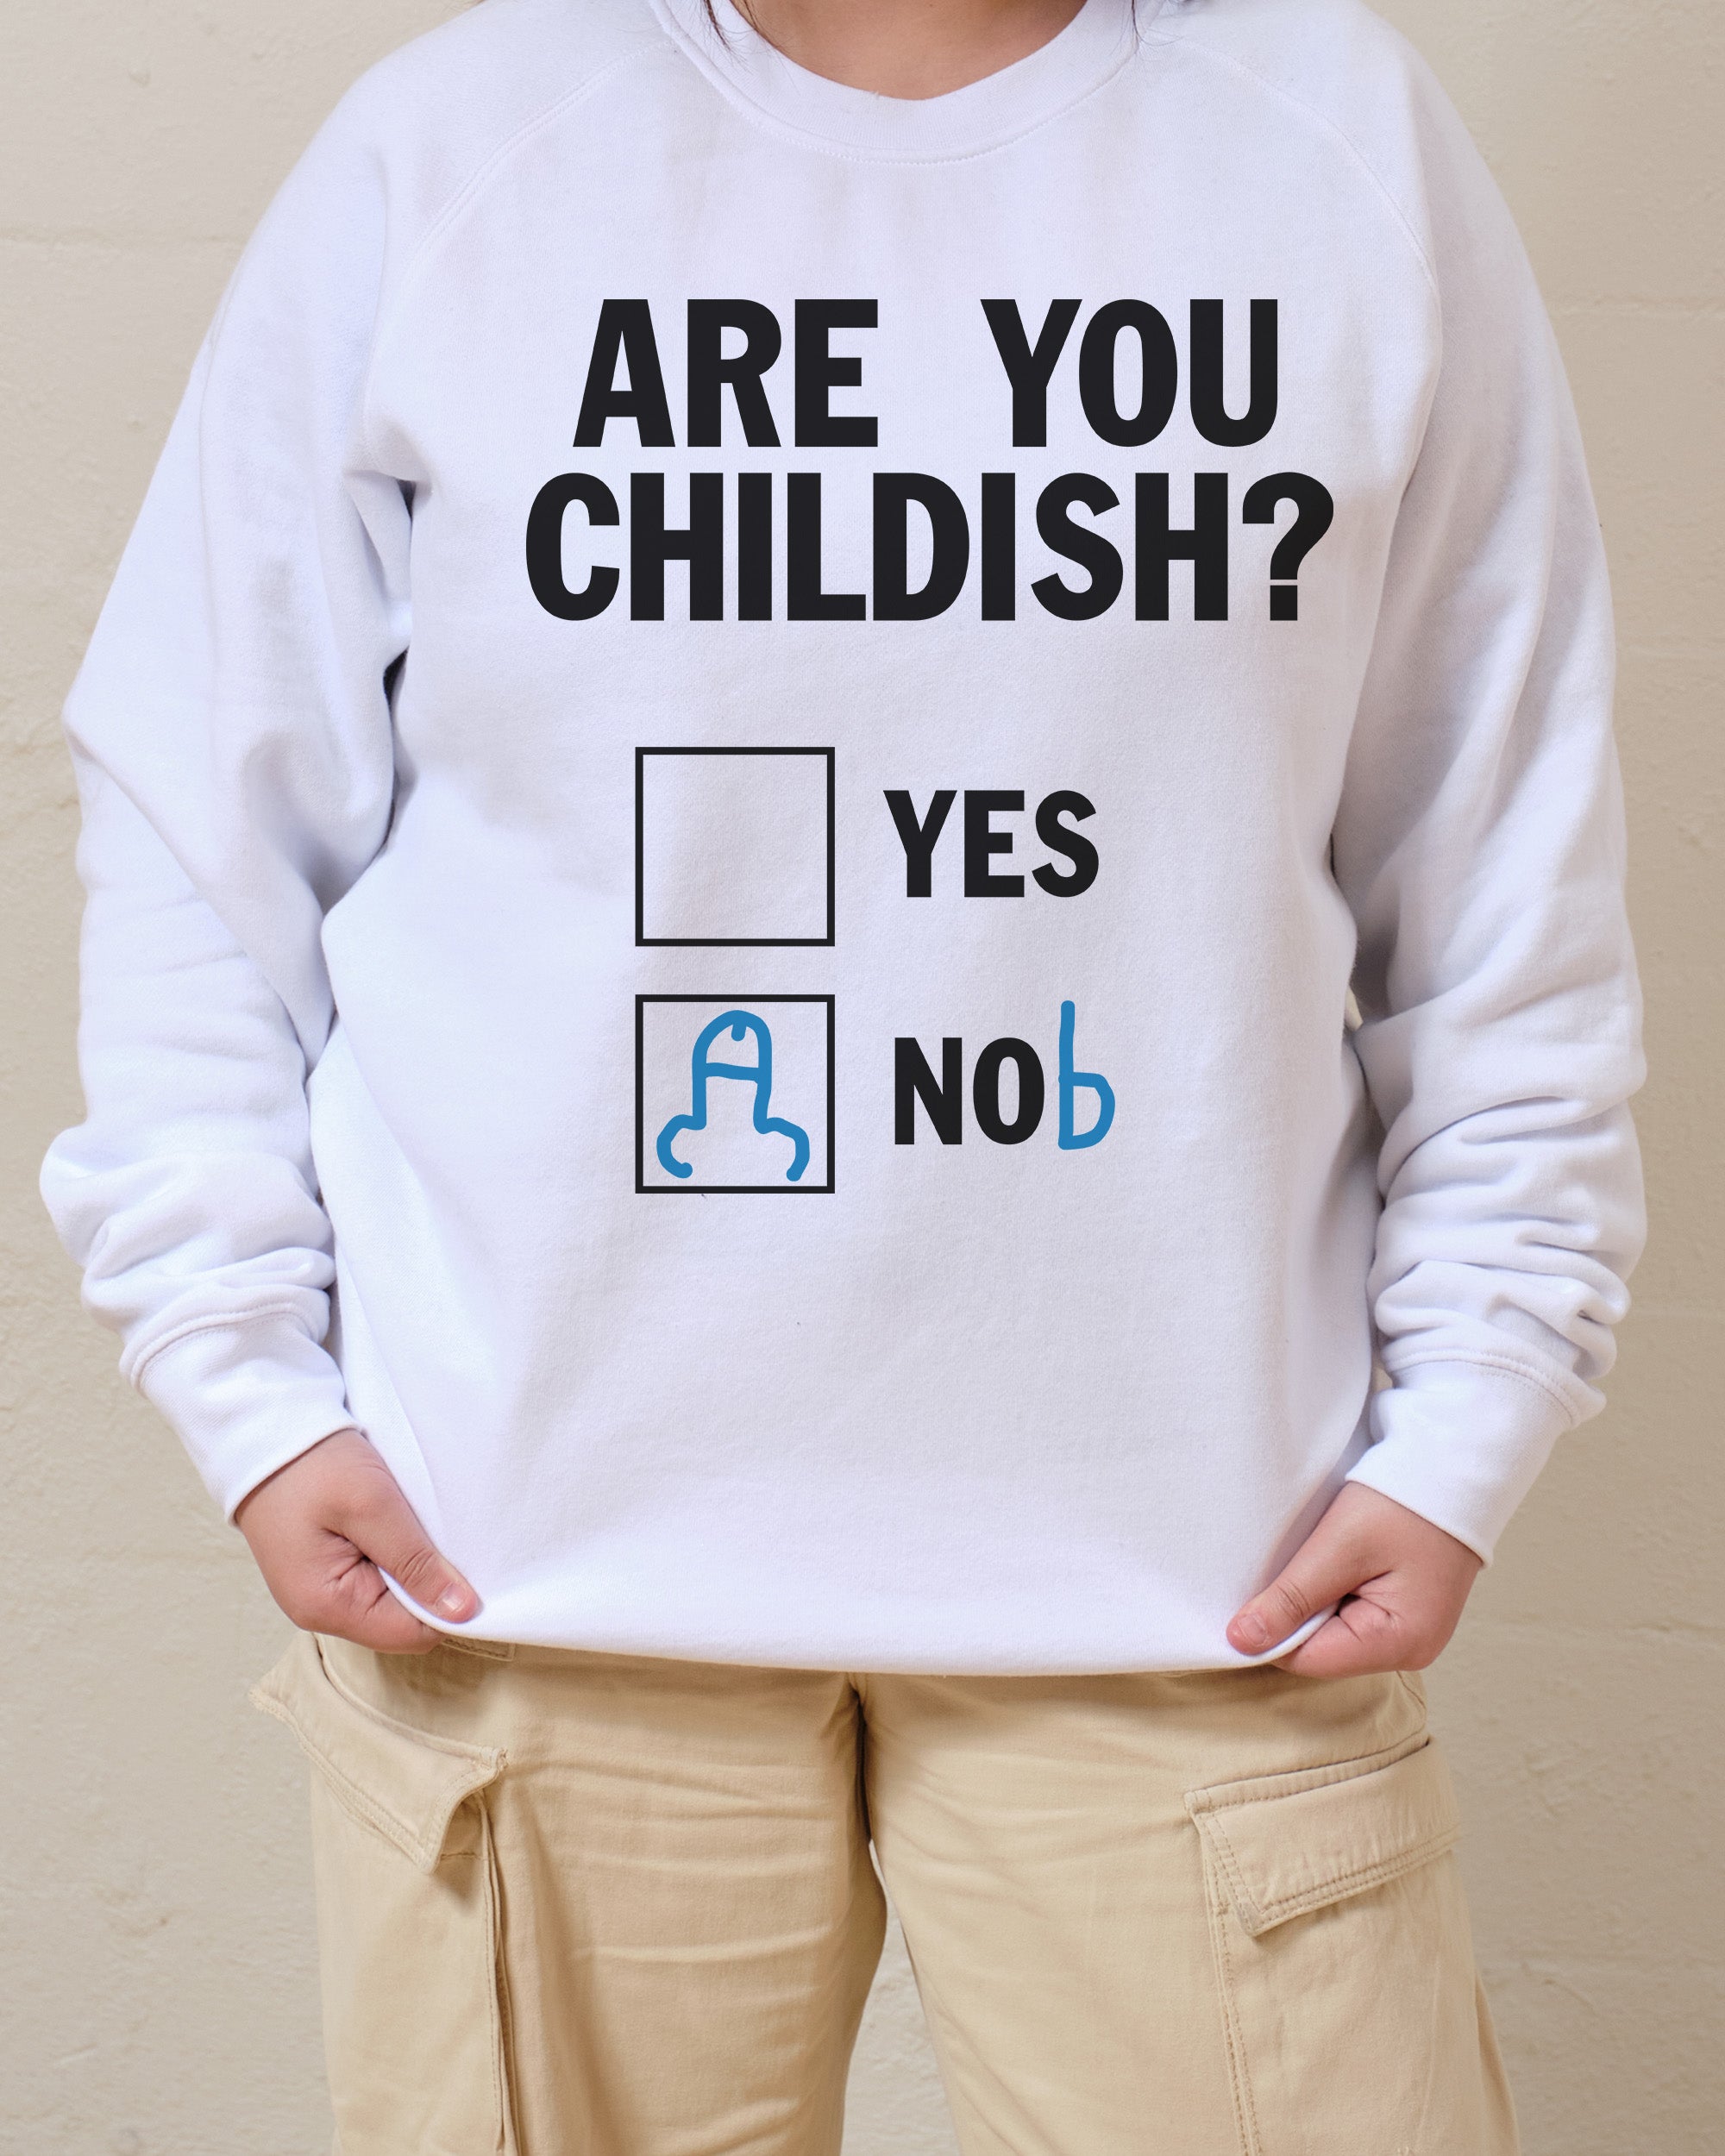 Are You Childish? Sweater Australia Online